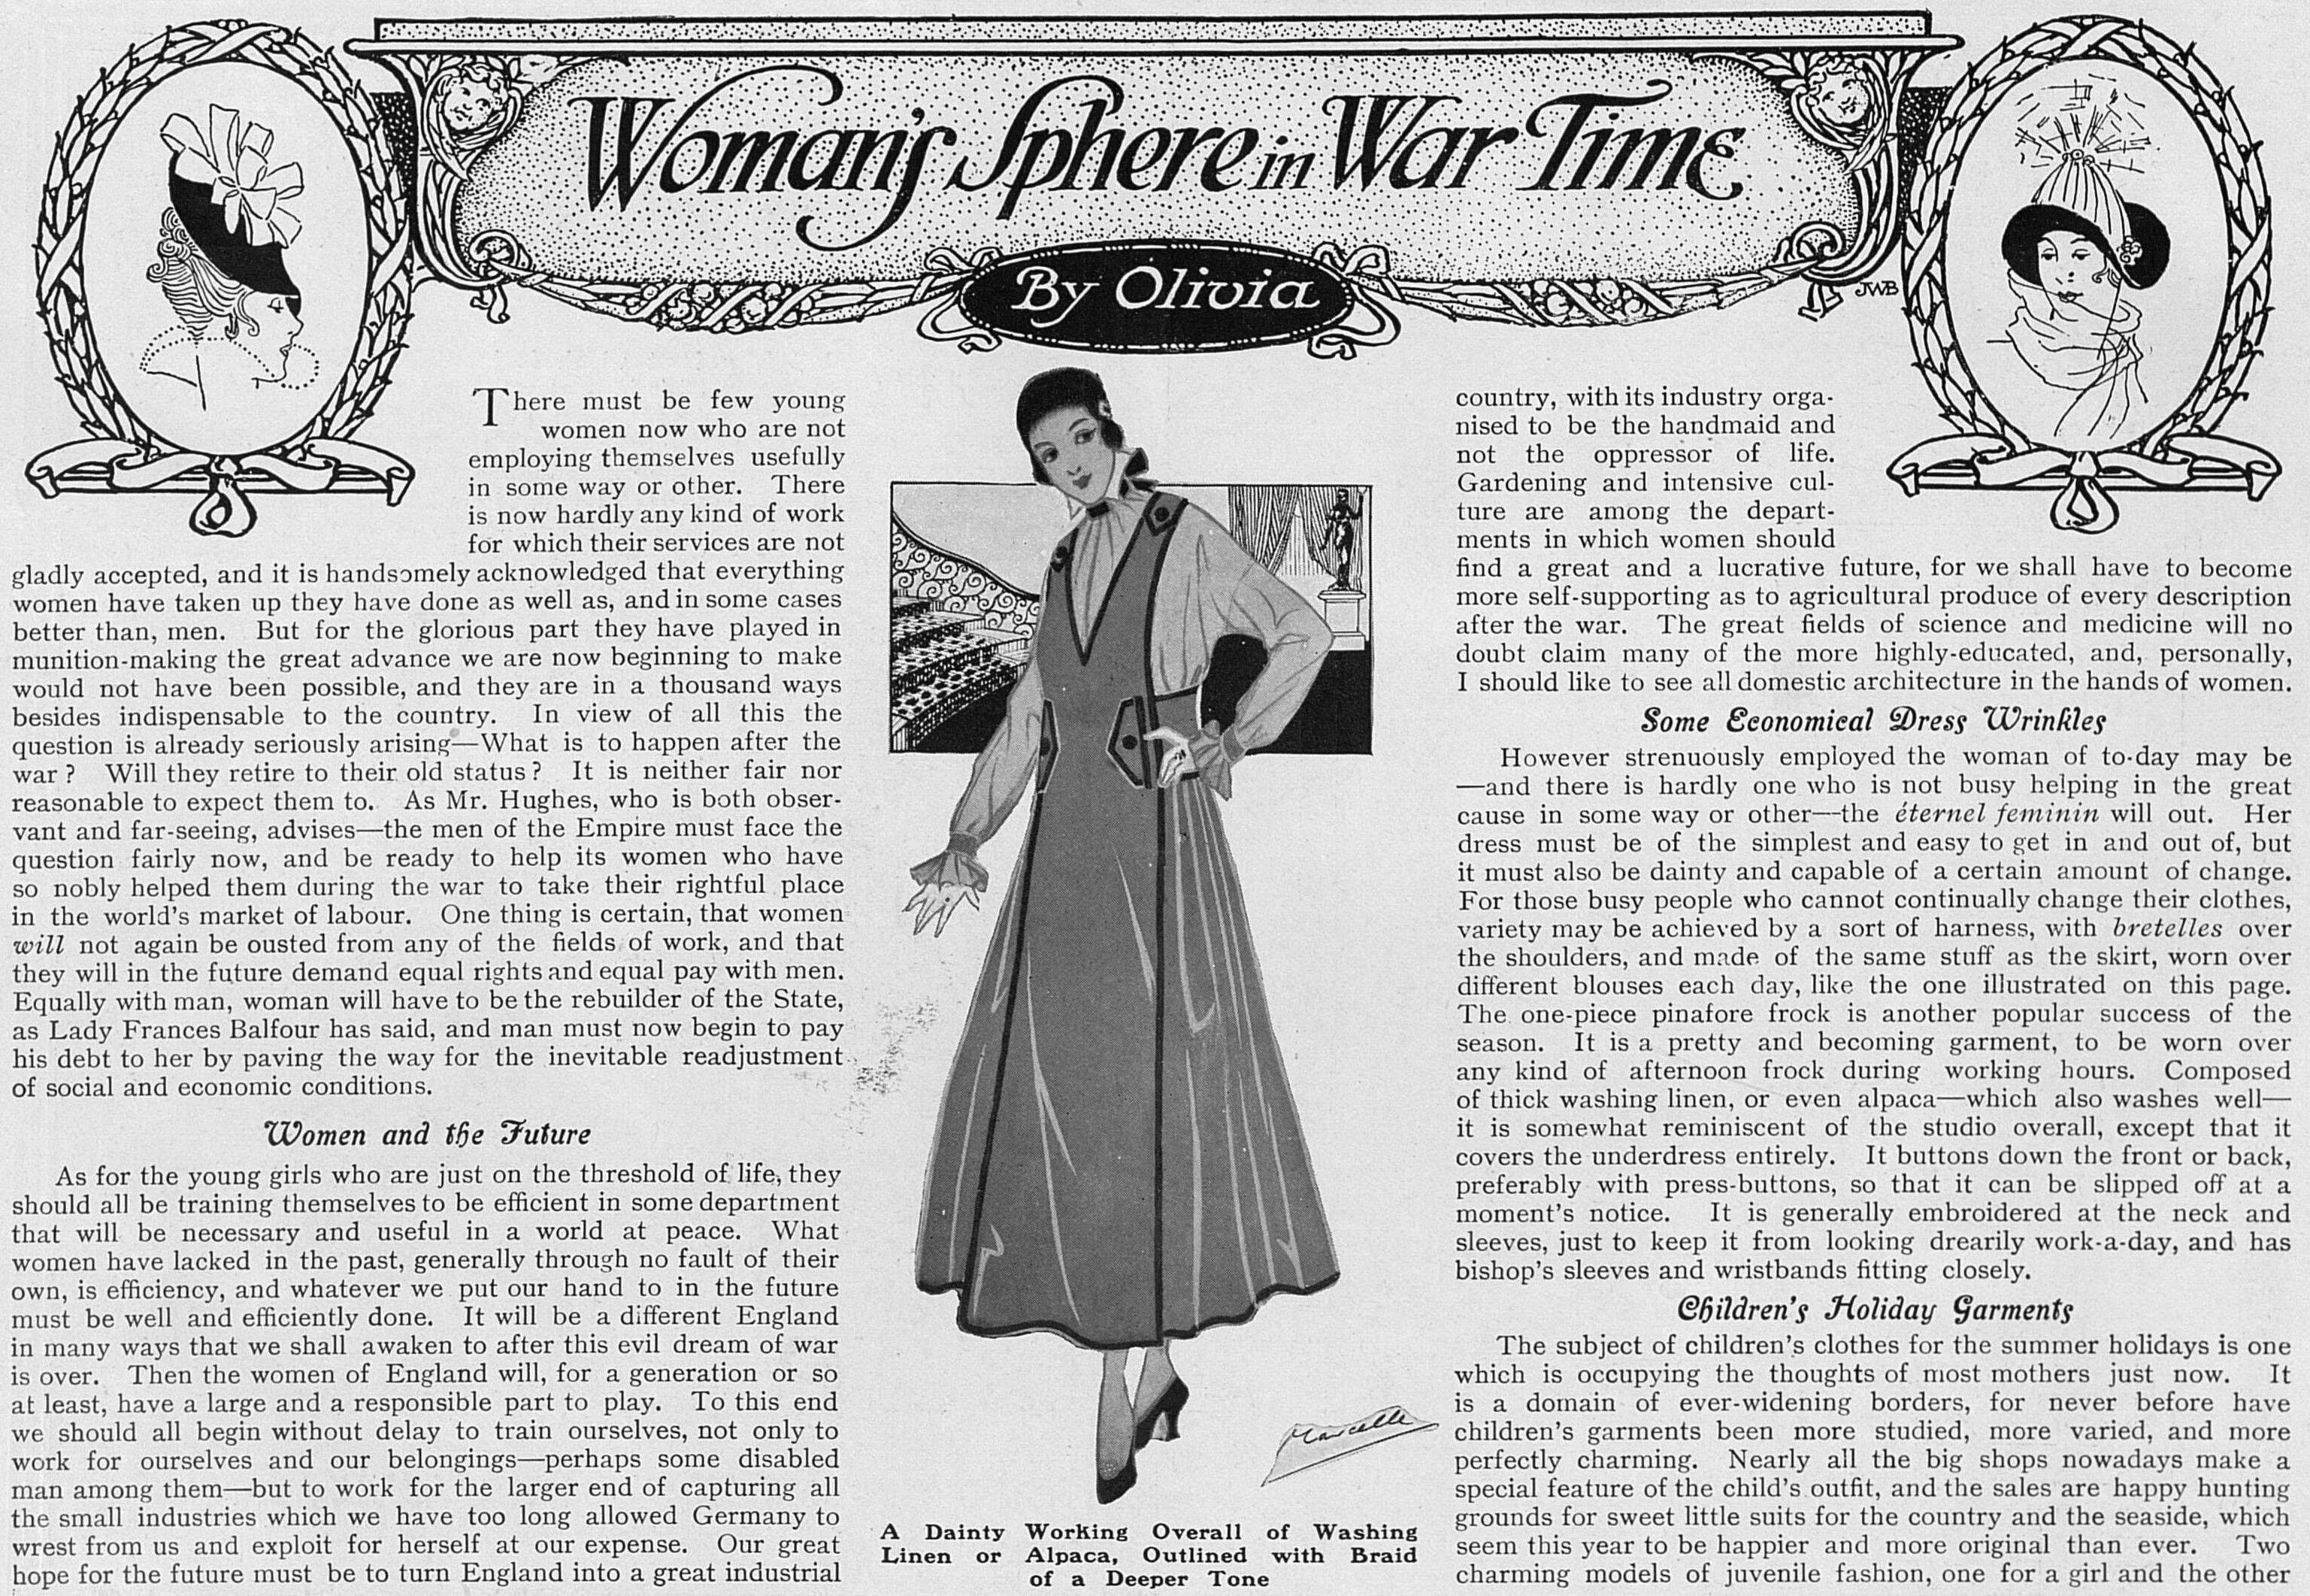 WomansSphereInWarTime_29Jul1916